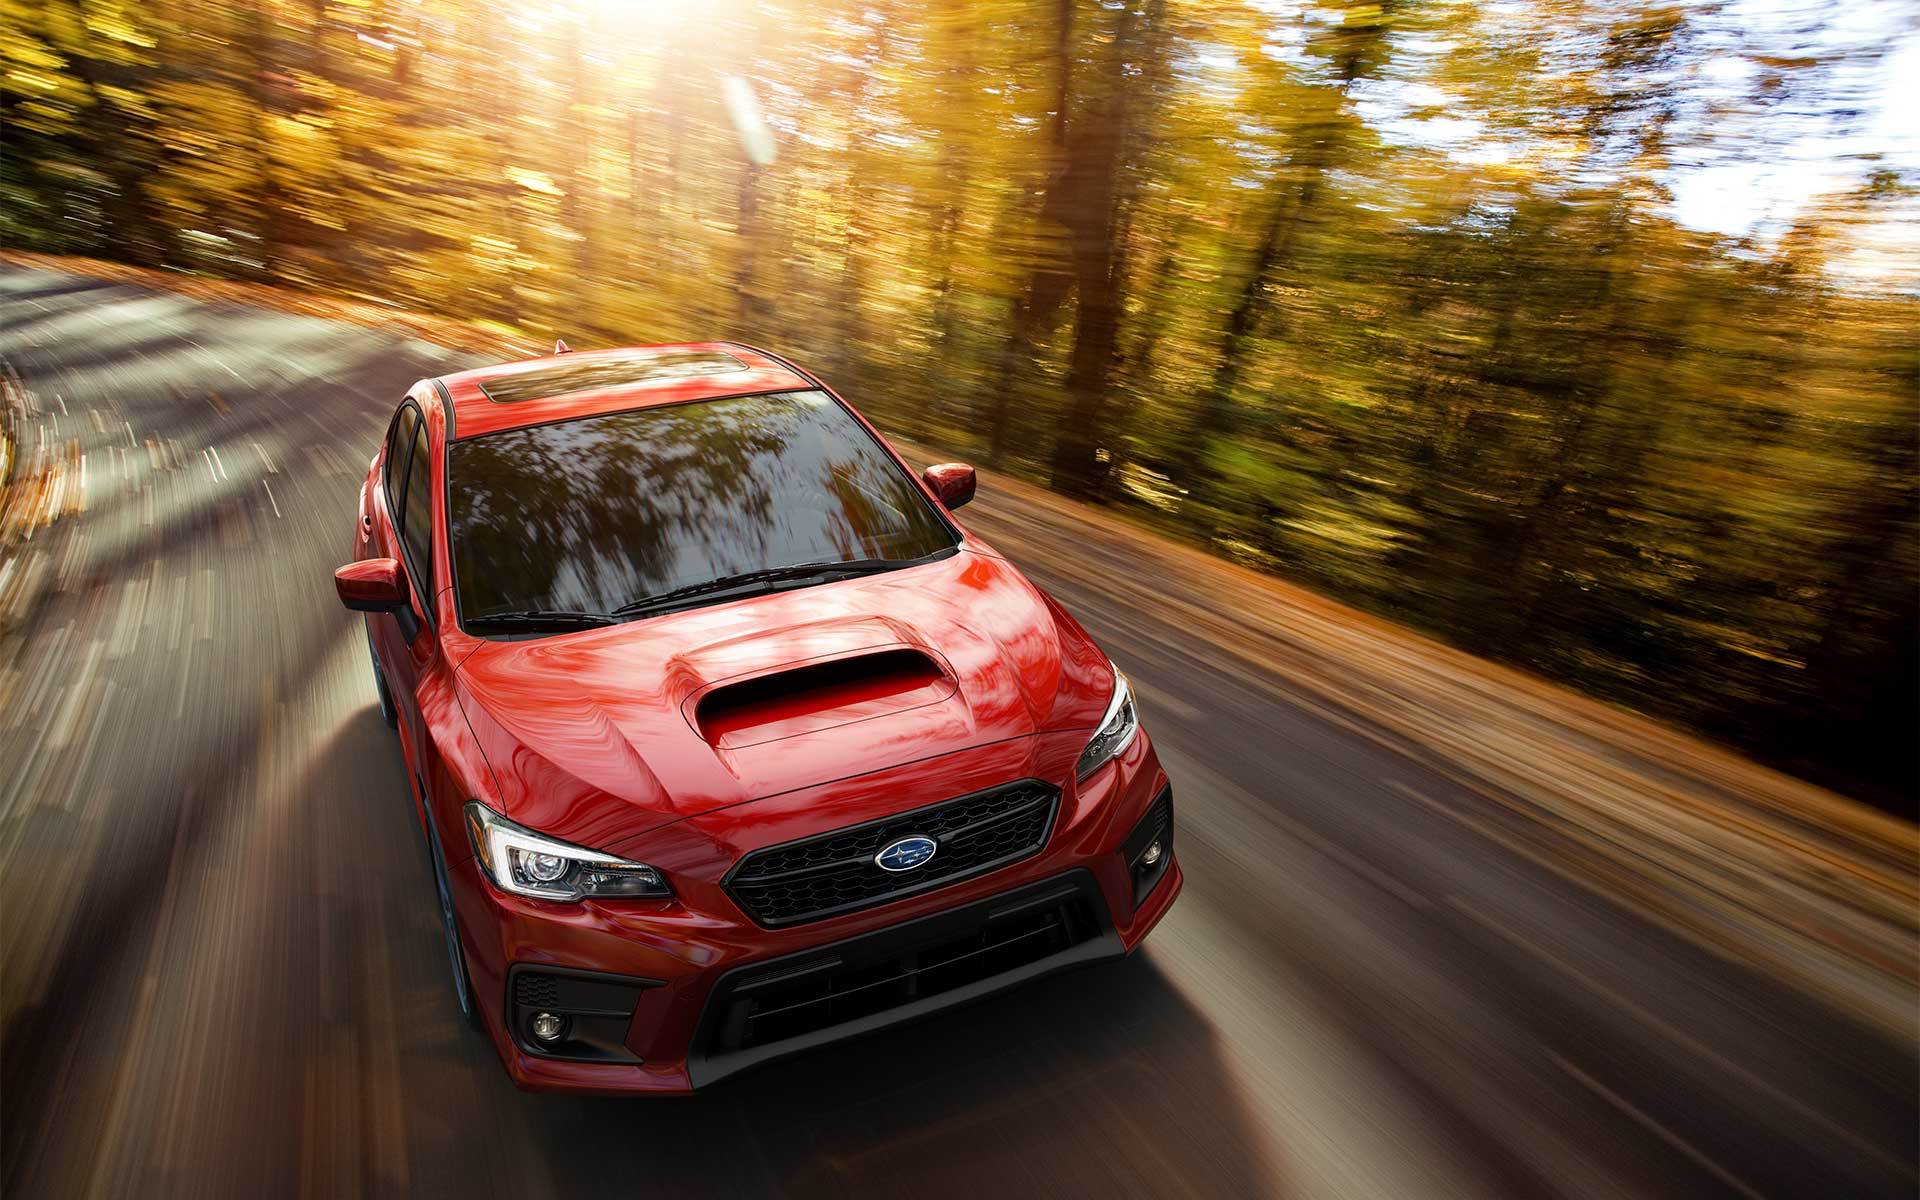 Consumer Reports didn't love the 2021 Subaru WRX